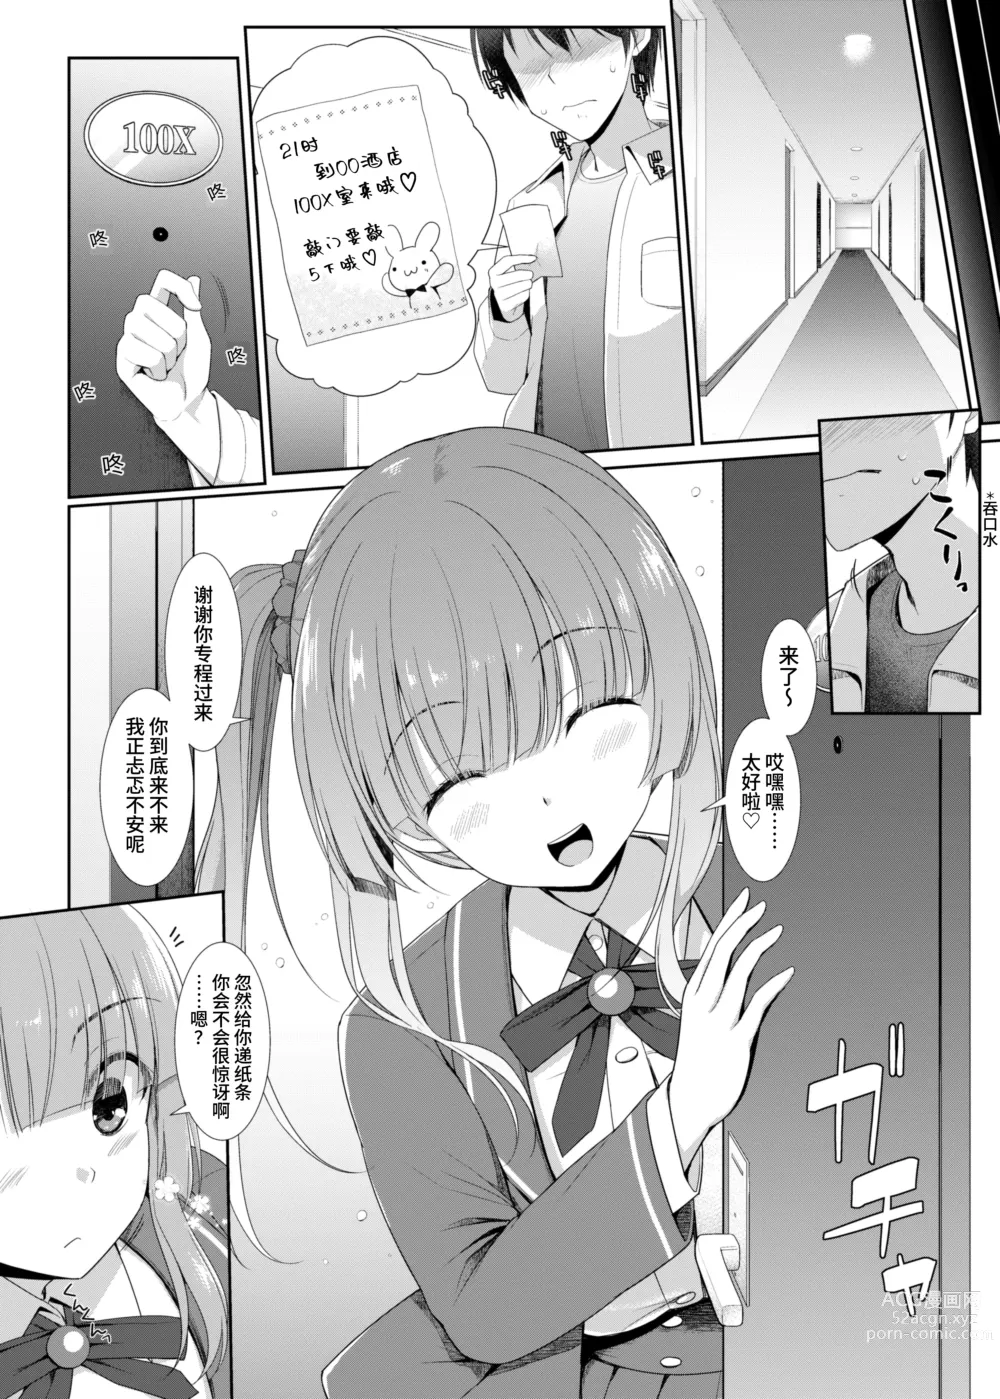 Page 6 of manga 【简体中文版】乳交专业杂志《绝对乳夹射》Vol.4